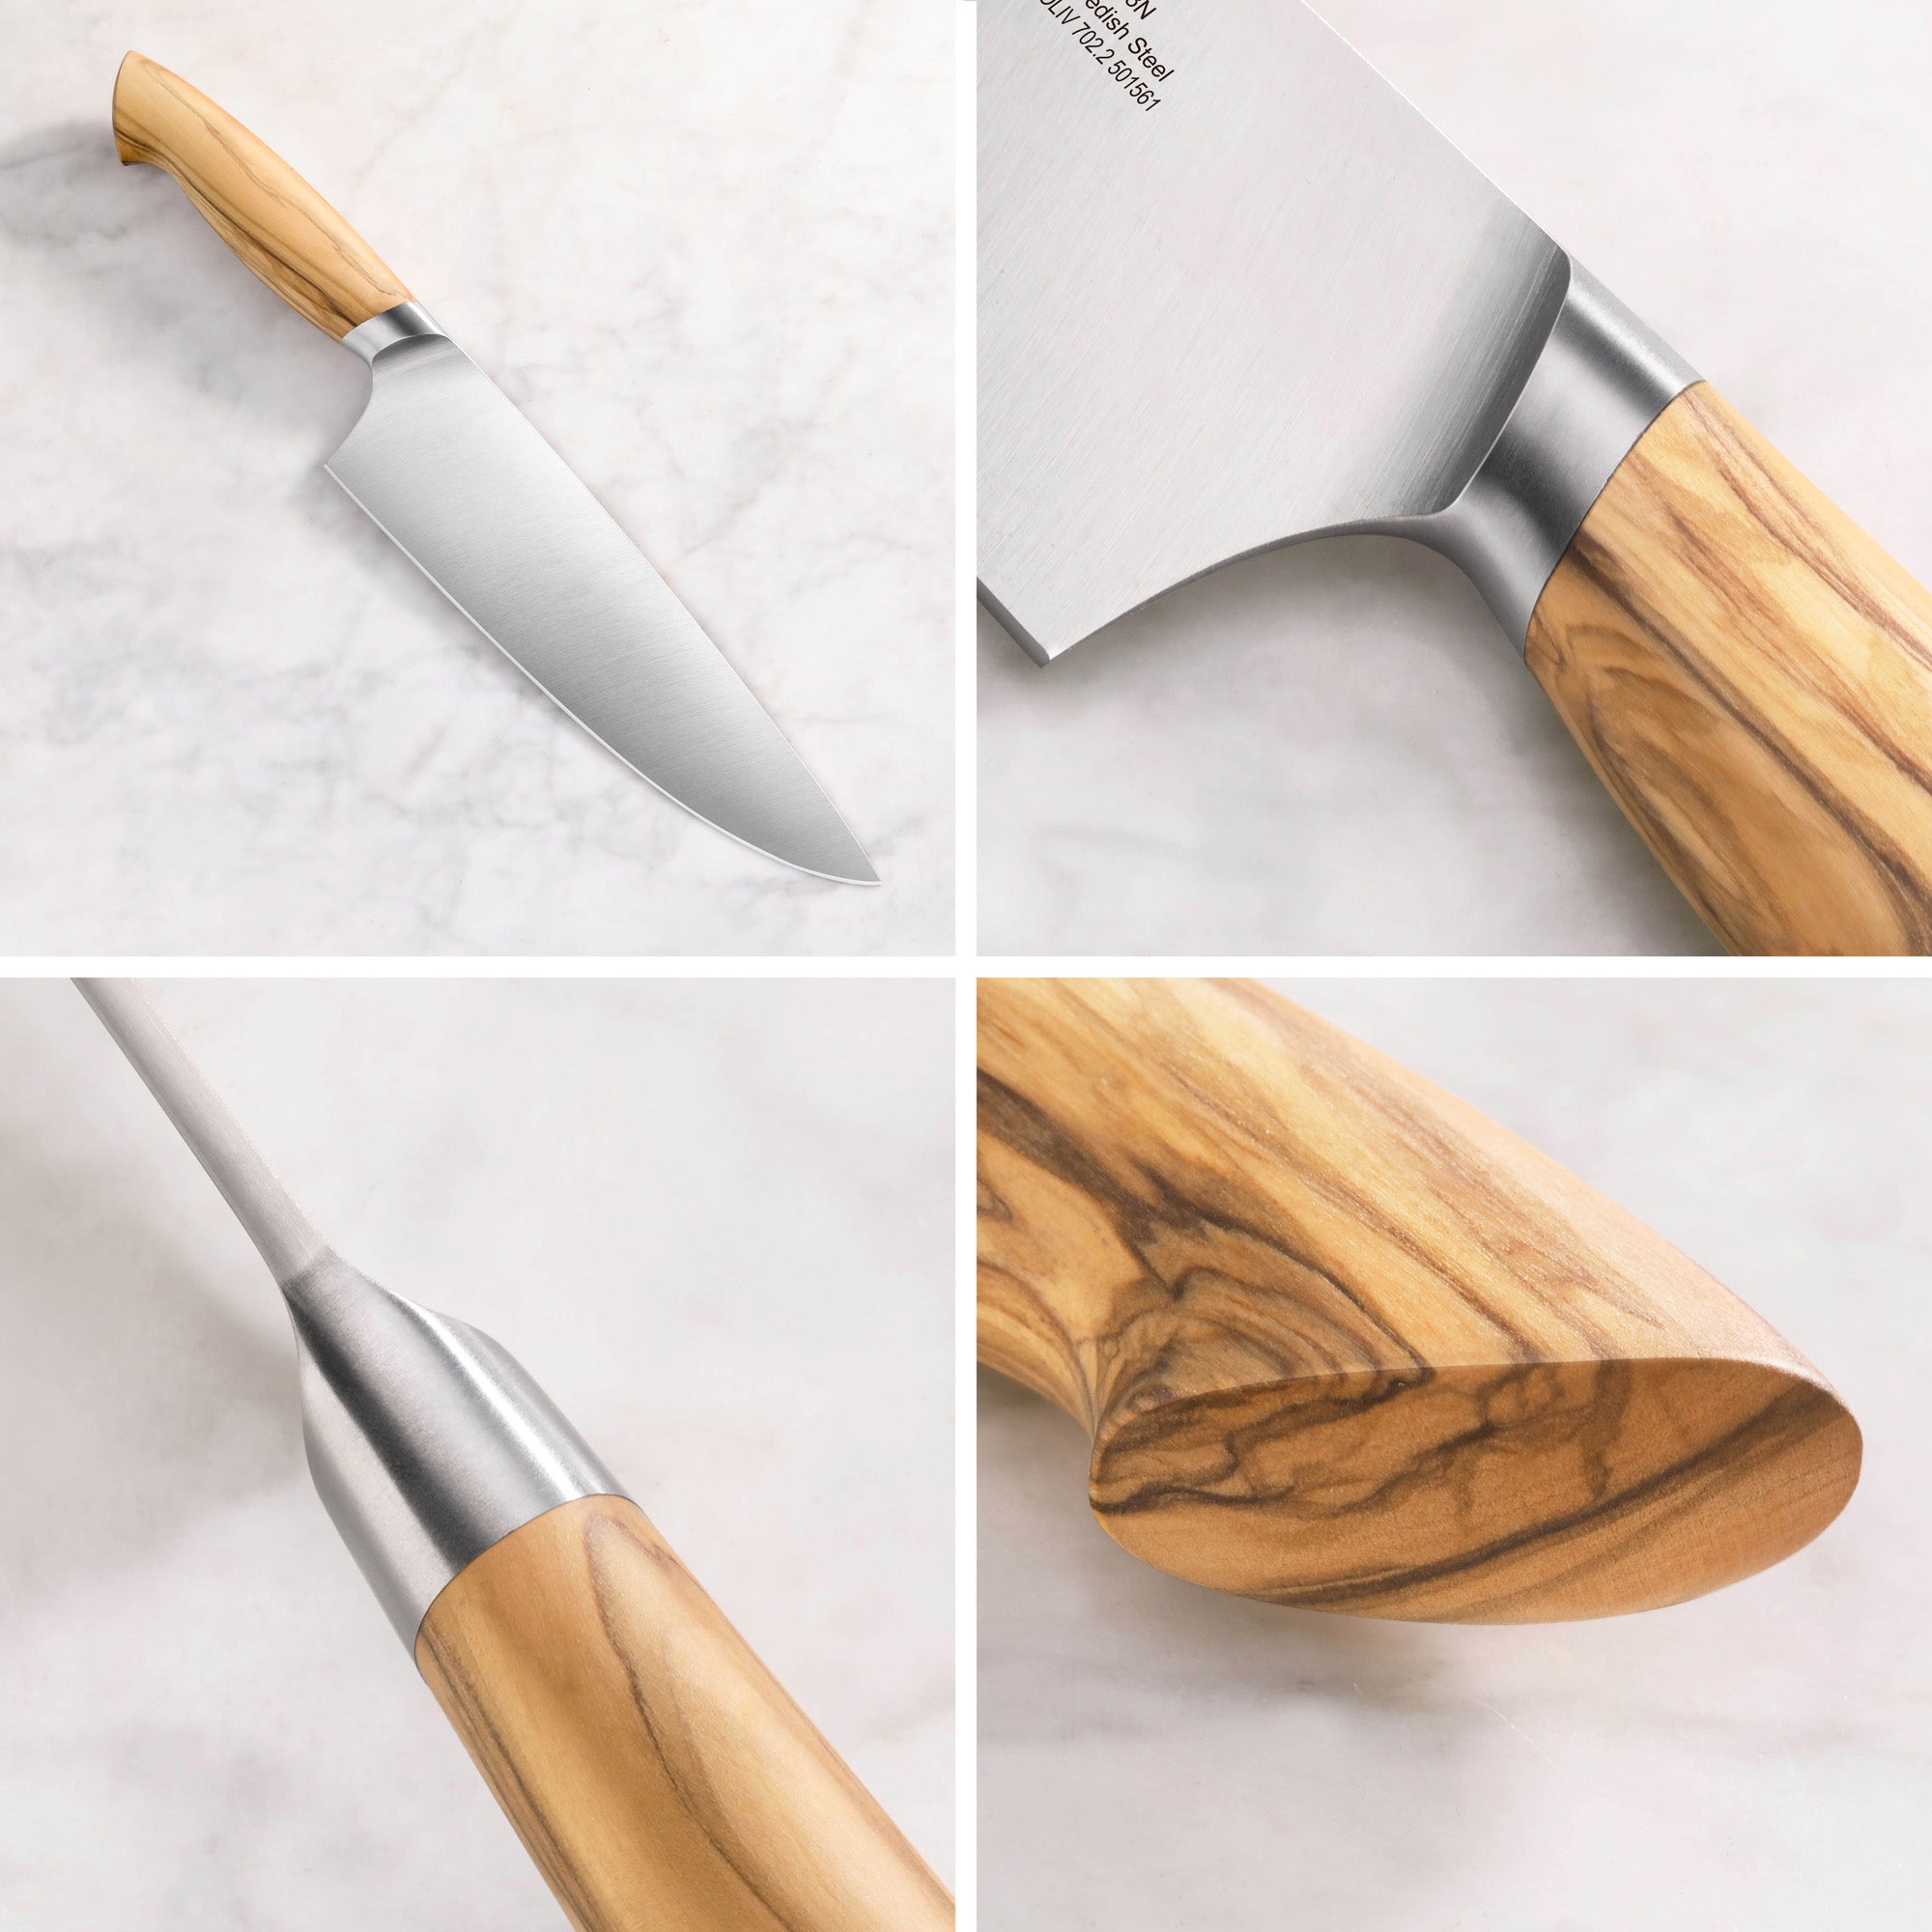 Cangshan OLIV 15-piece Knife Block Set, Maple Block